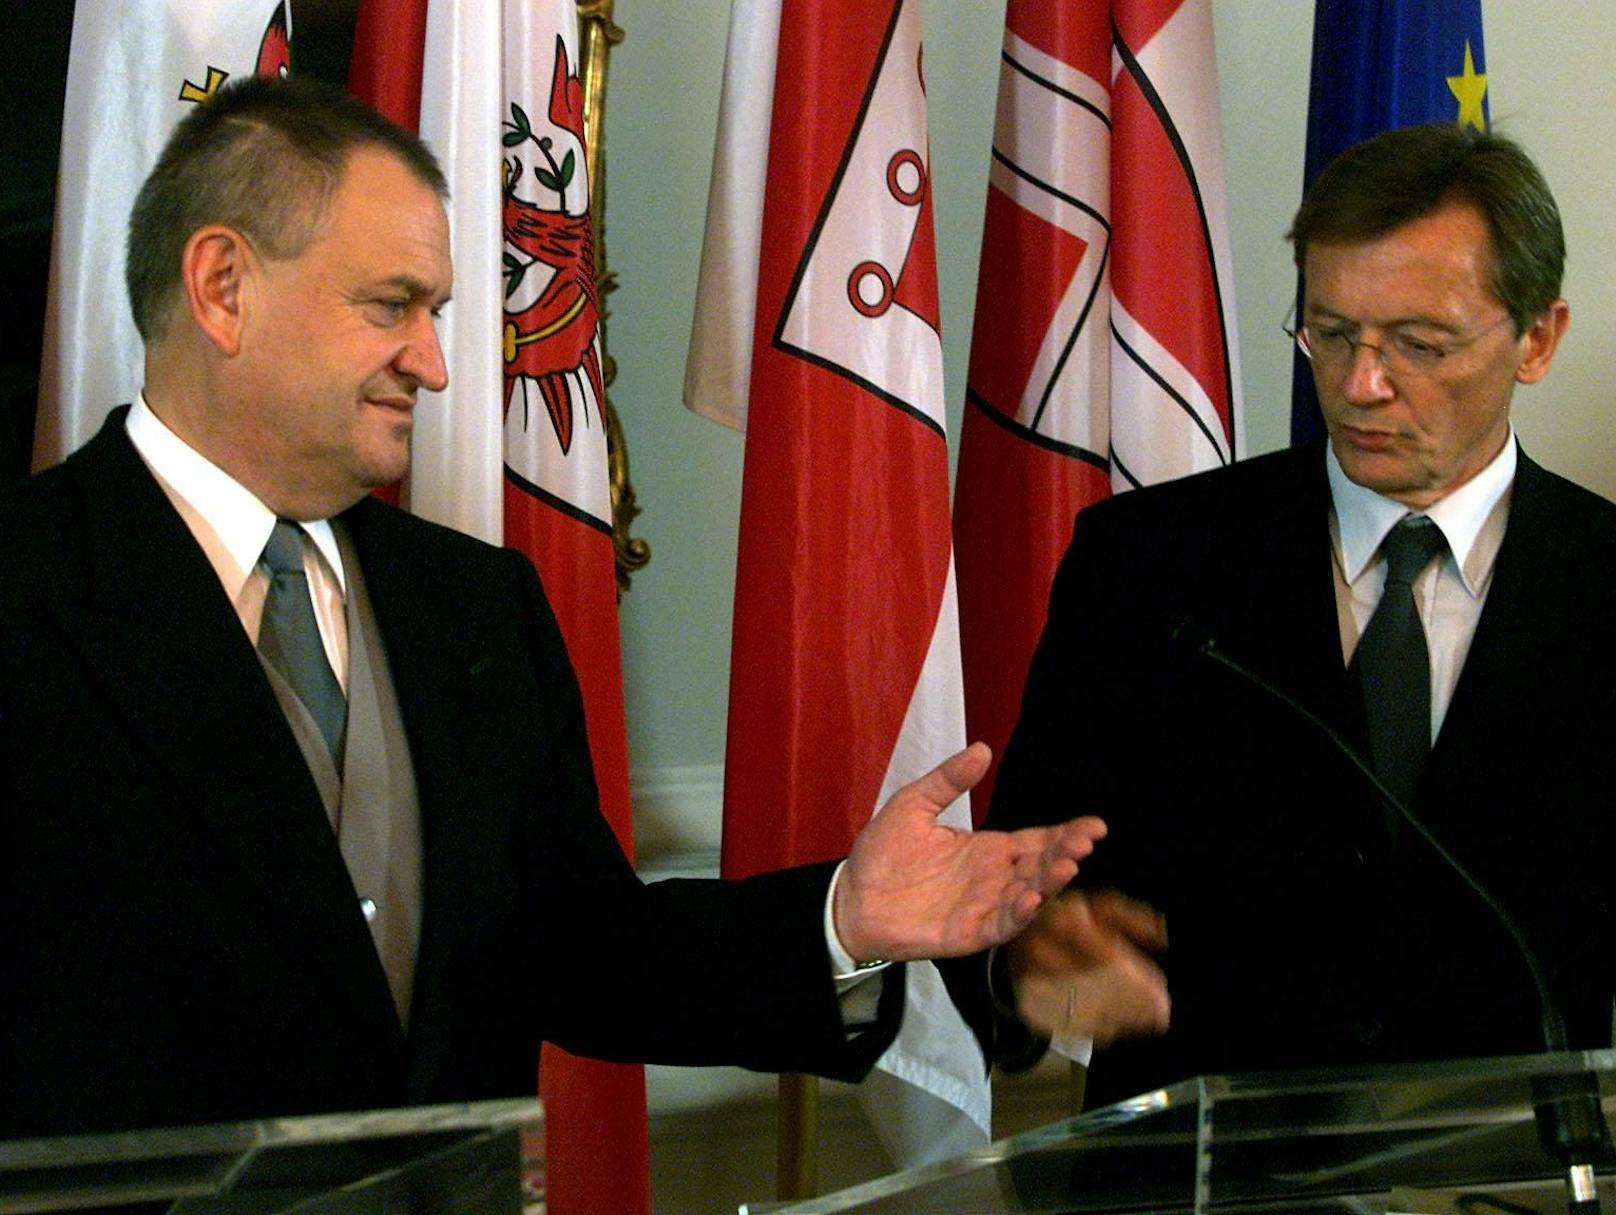 Oktober 2000 bis April 2003: Herbert Haupt (FPÖ, links im Bild)